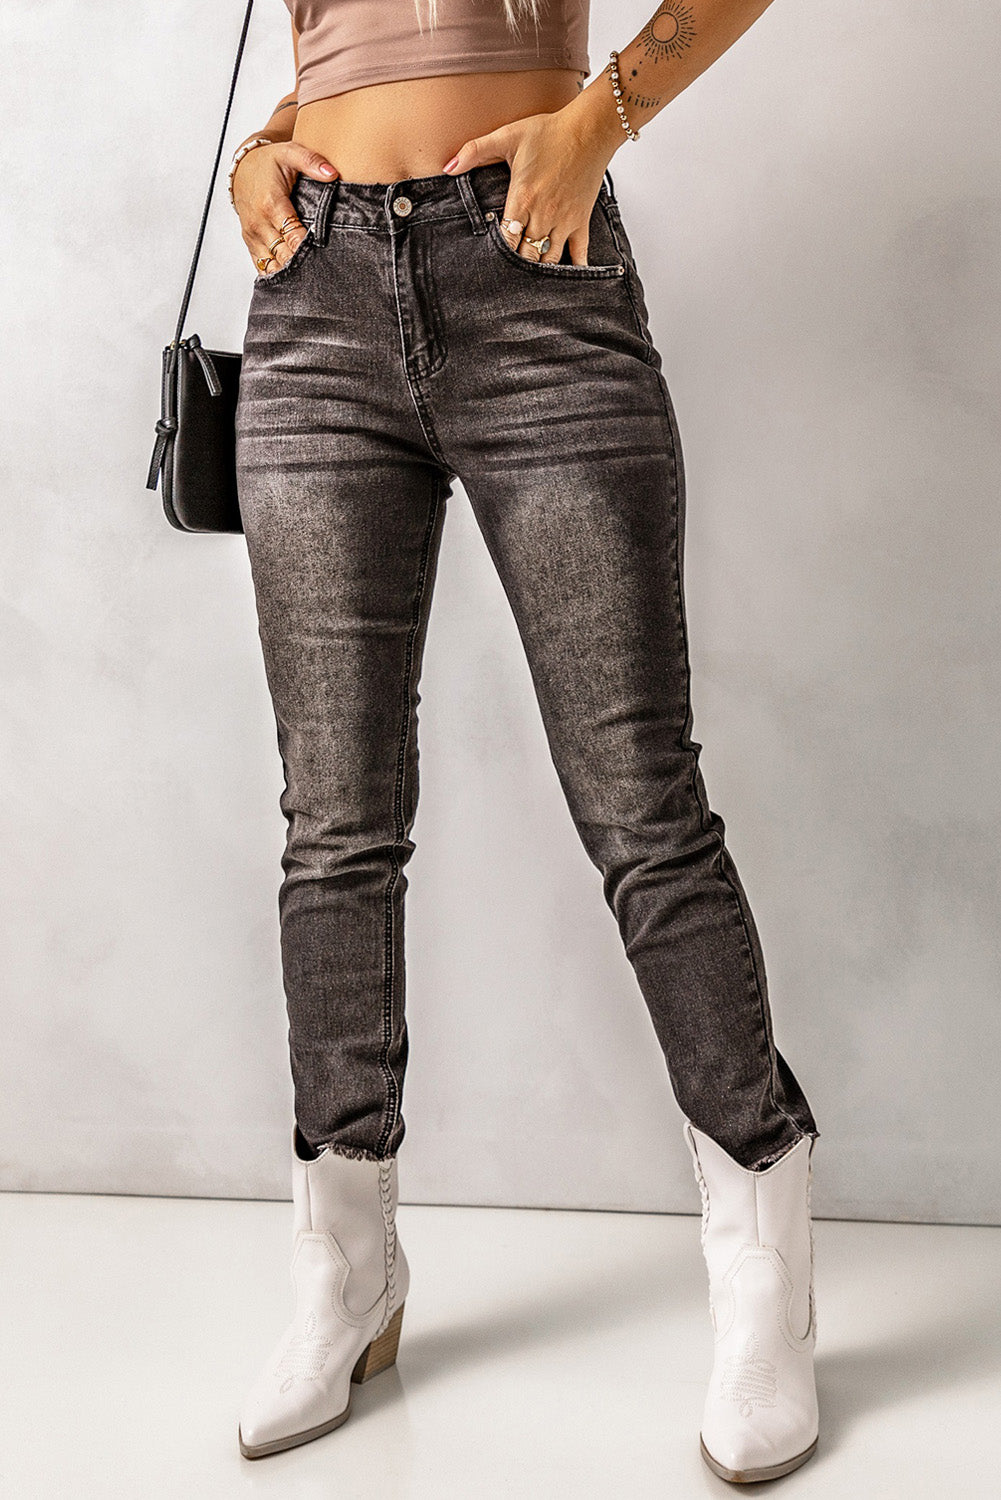 Woman waring -Black- Charcoal - Moody -High -Waist -Raw -Hem -Skinny -Jeans